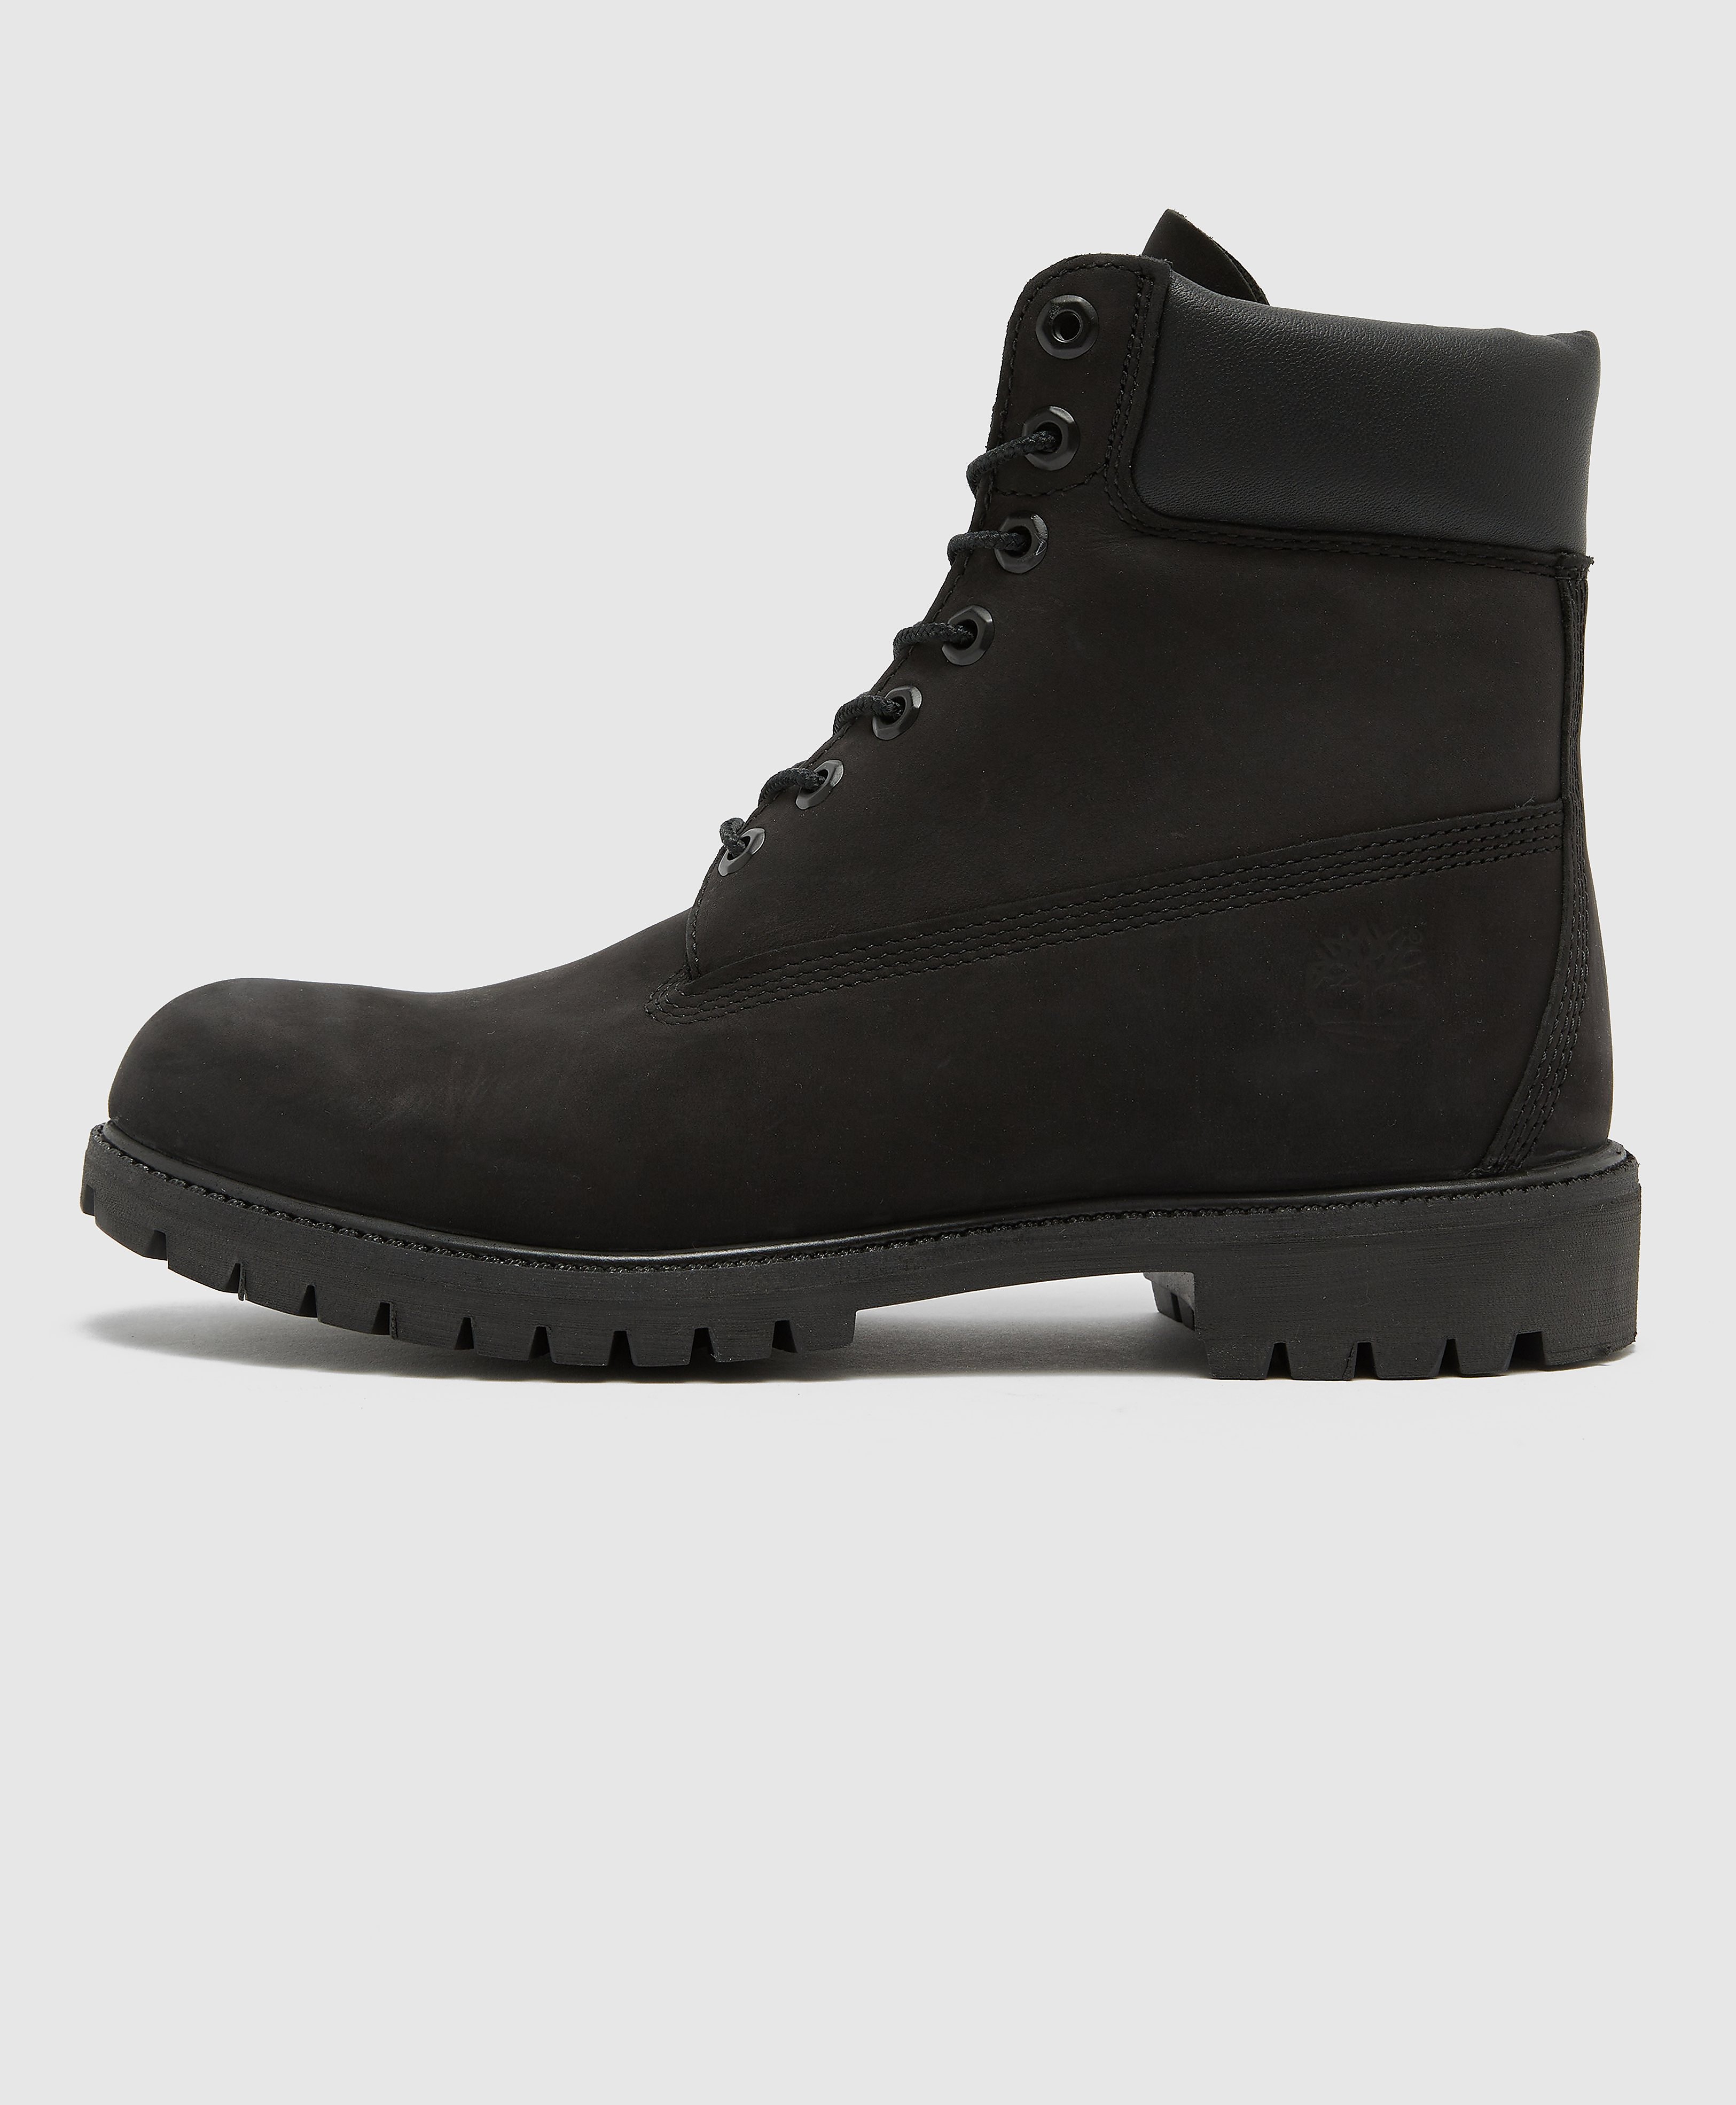 Timberland Men's 6 Inch Premium Boot - Black, Black